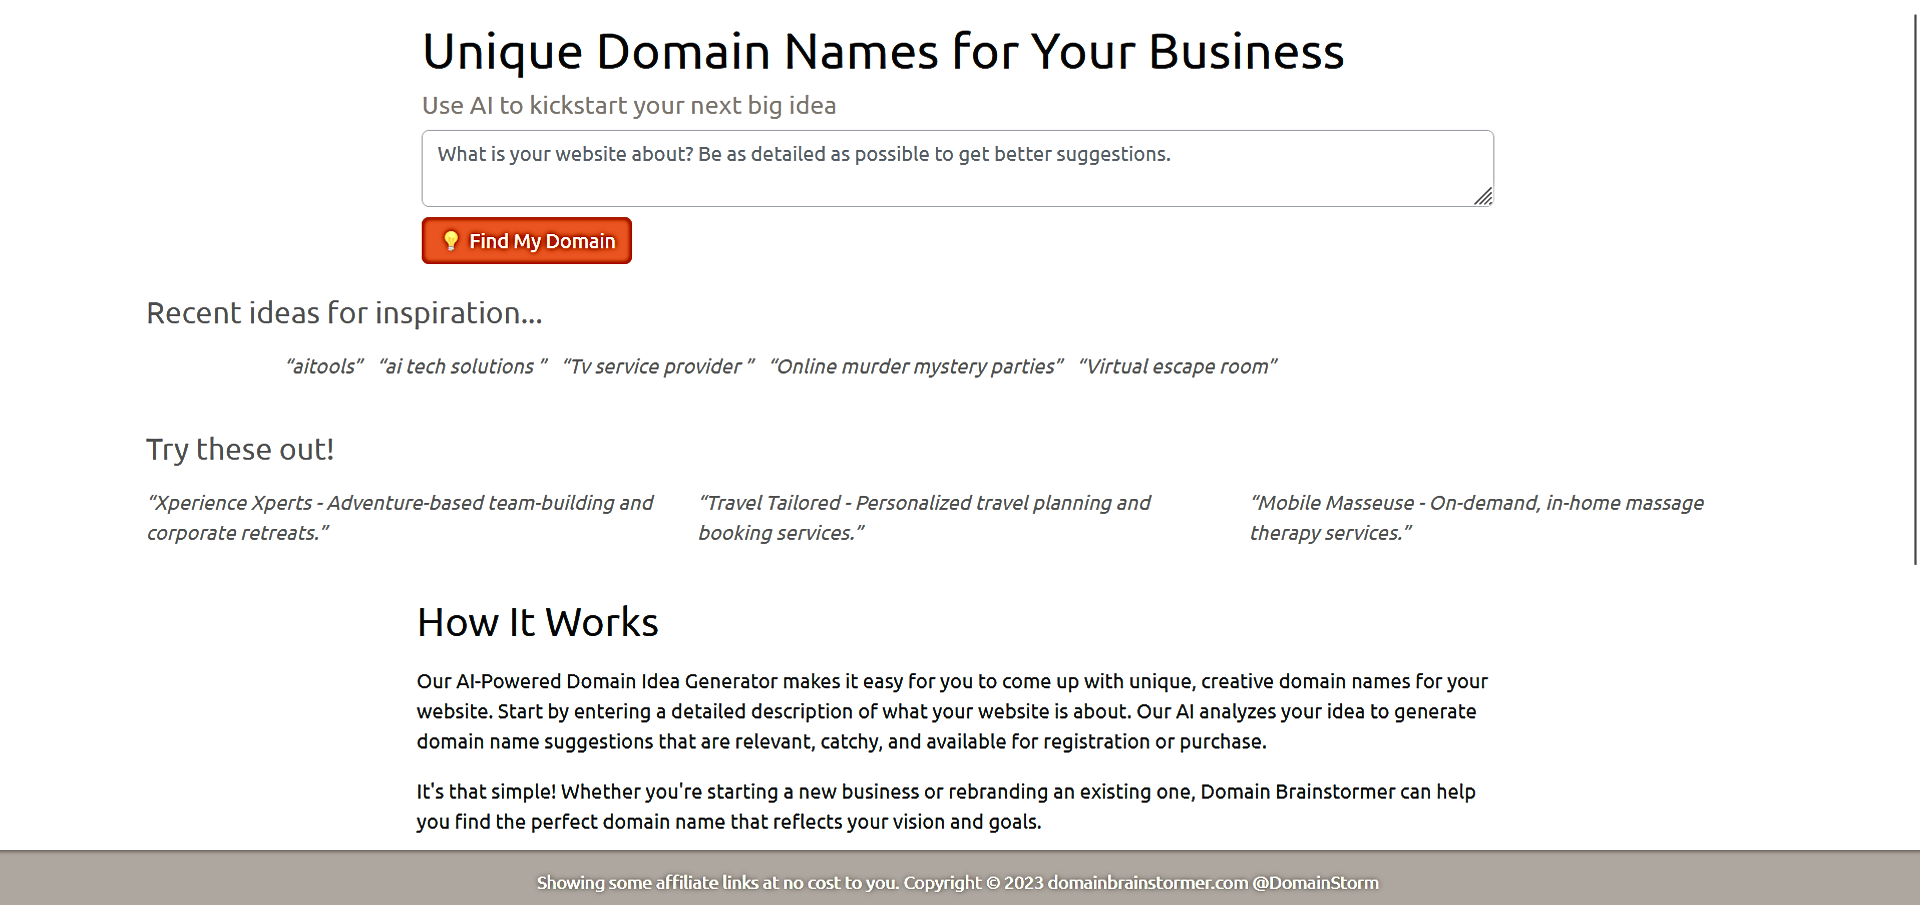 Domain Brainstormer featured